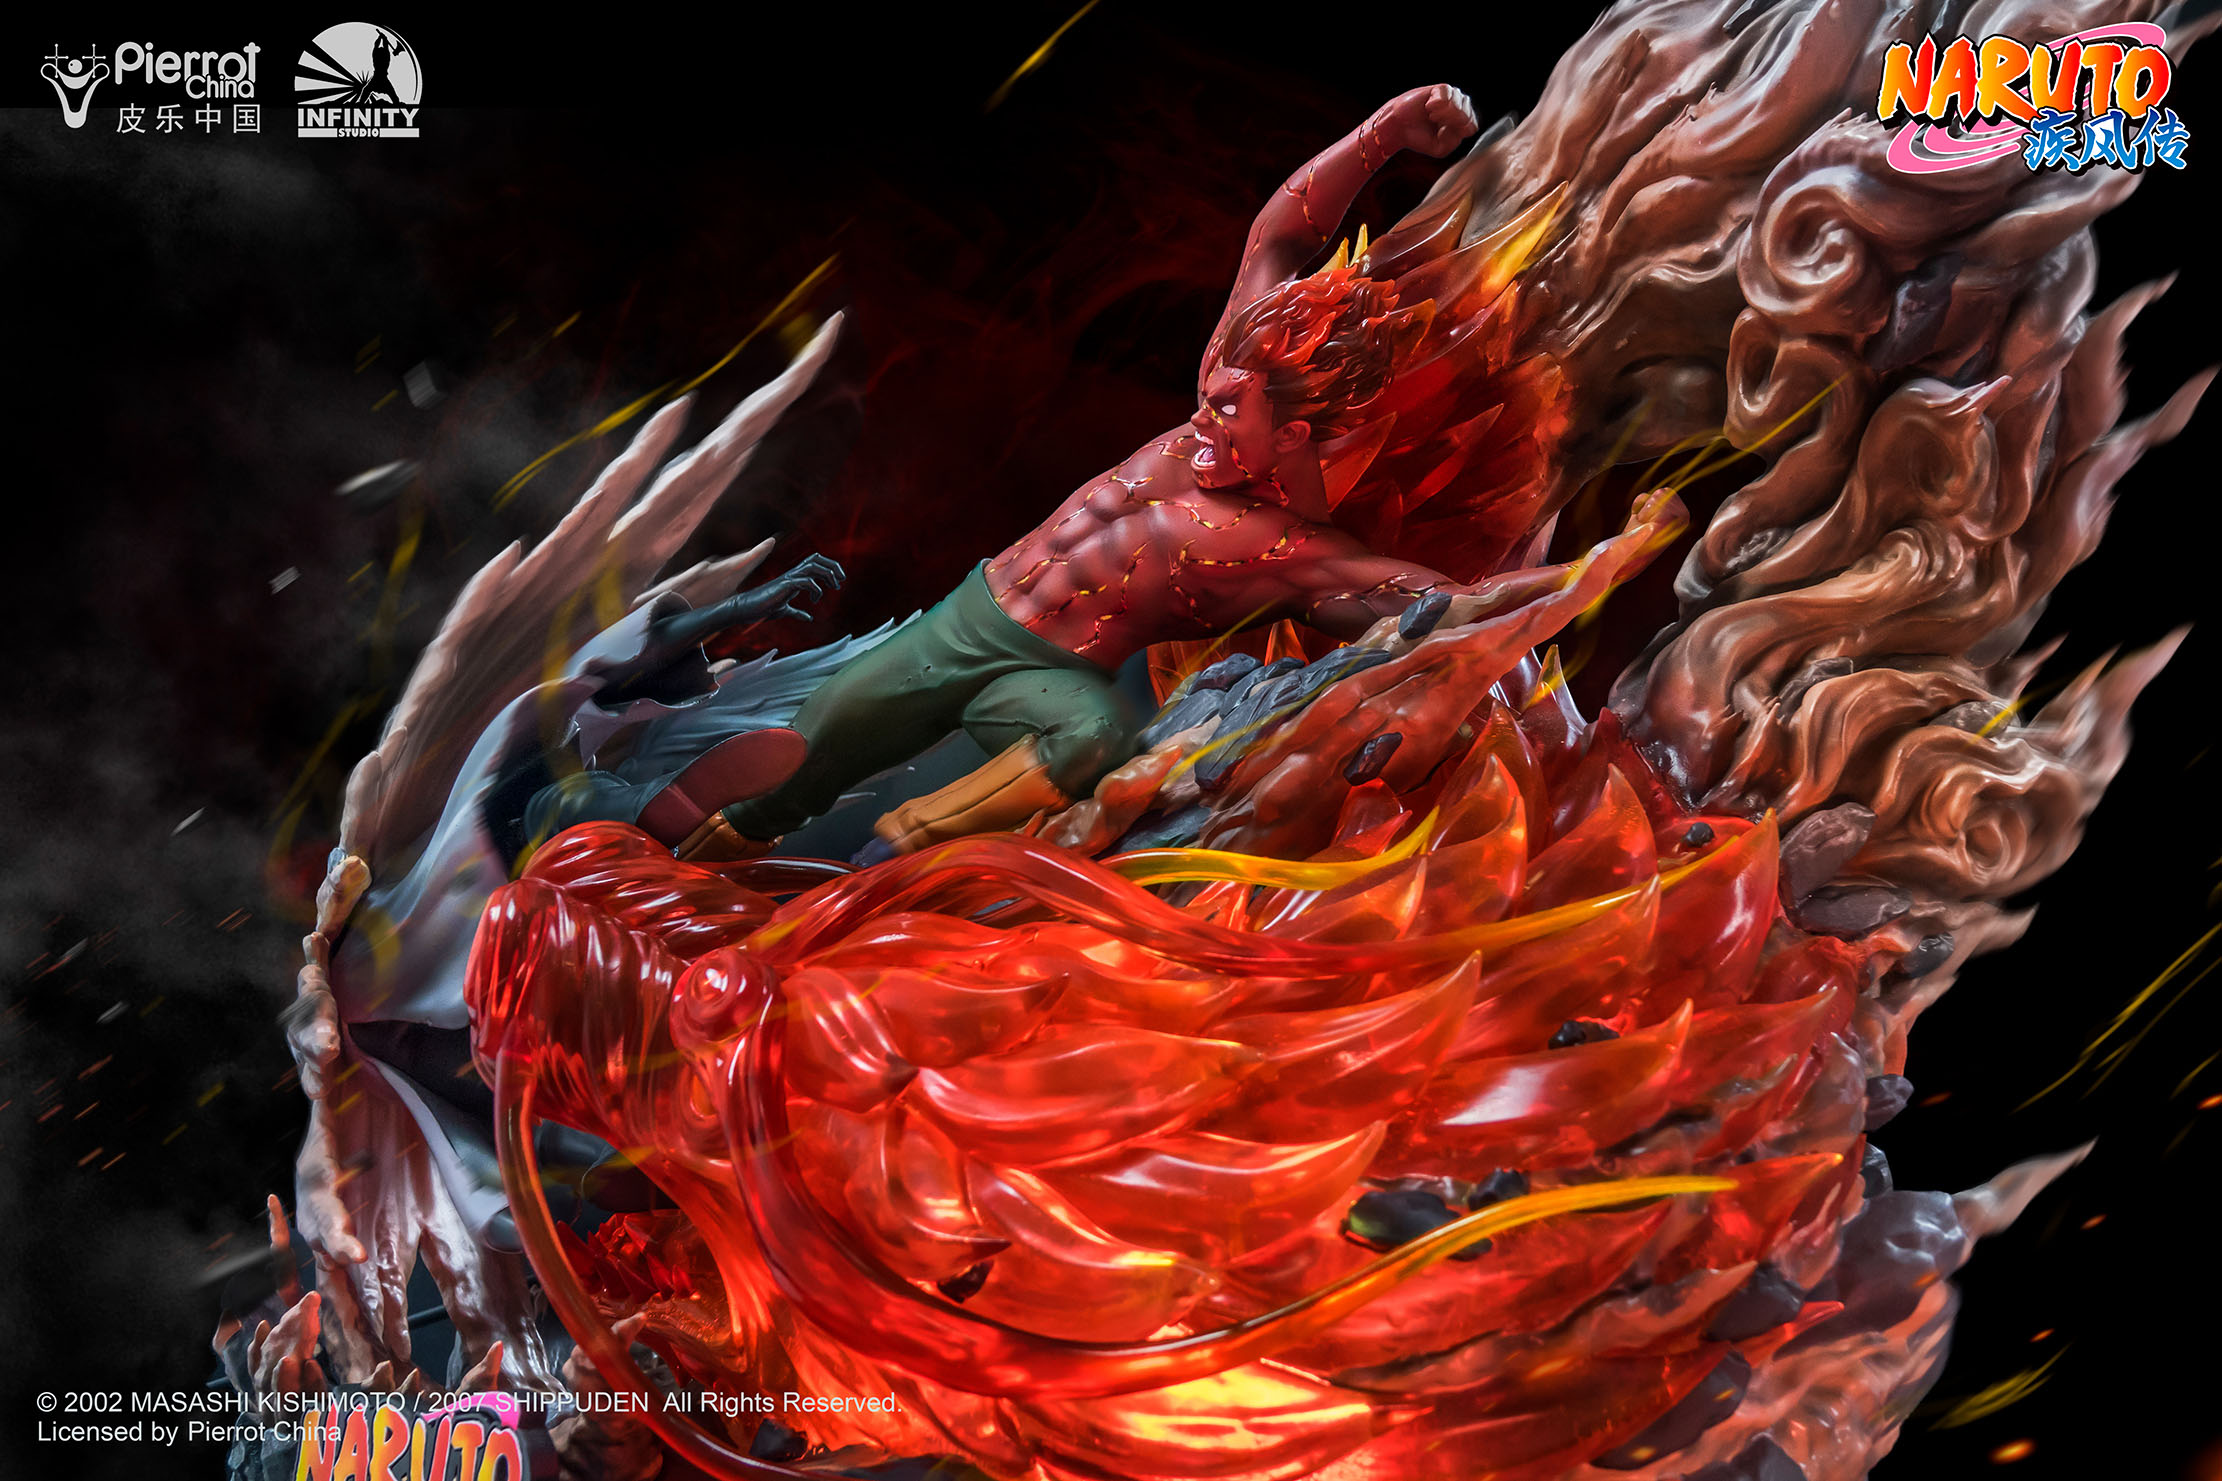 Press Release: Infinity Studio Guy vs Madara Statue from Naruto